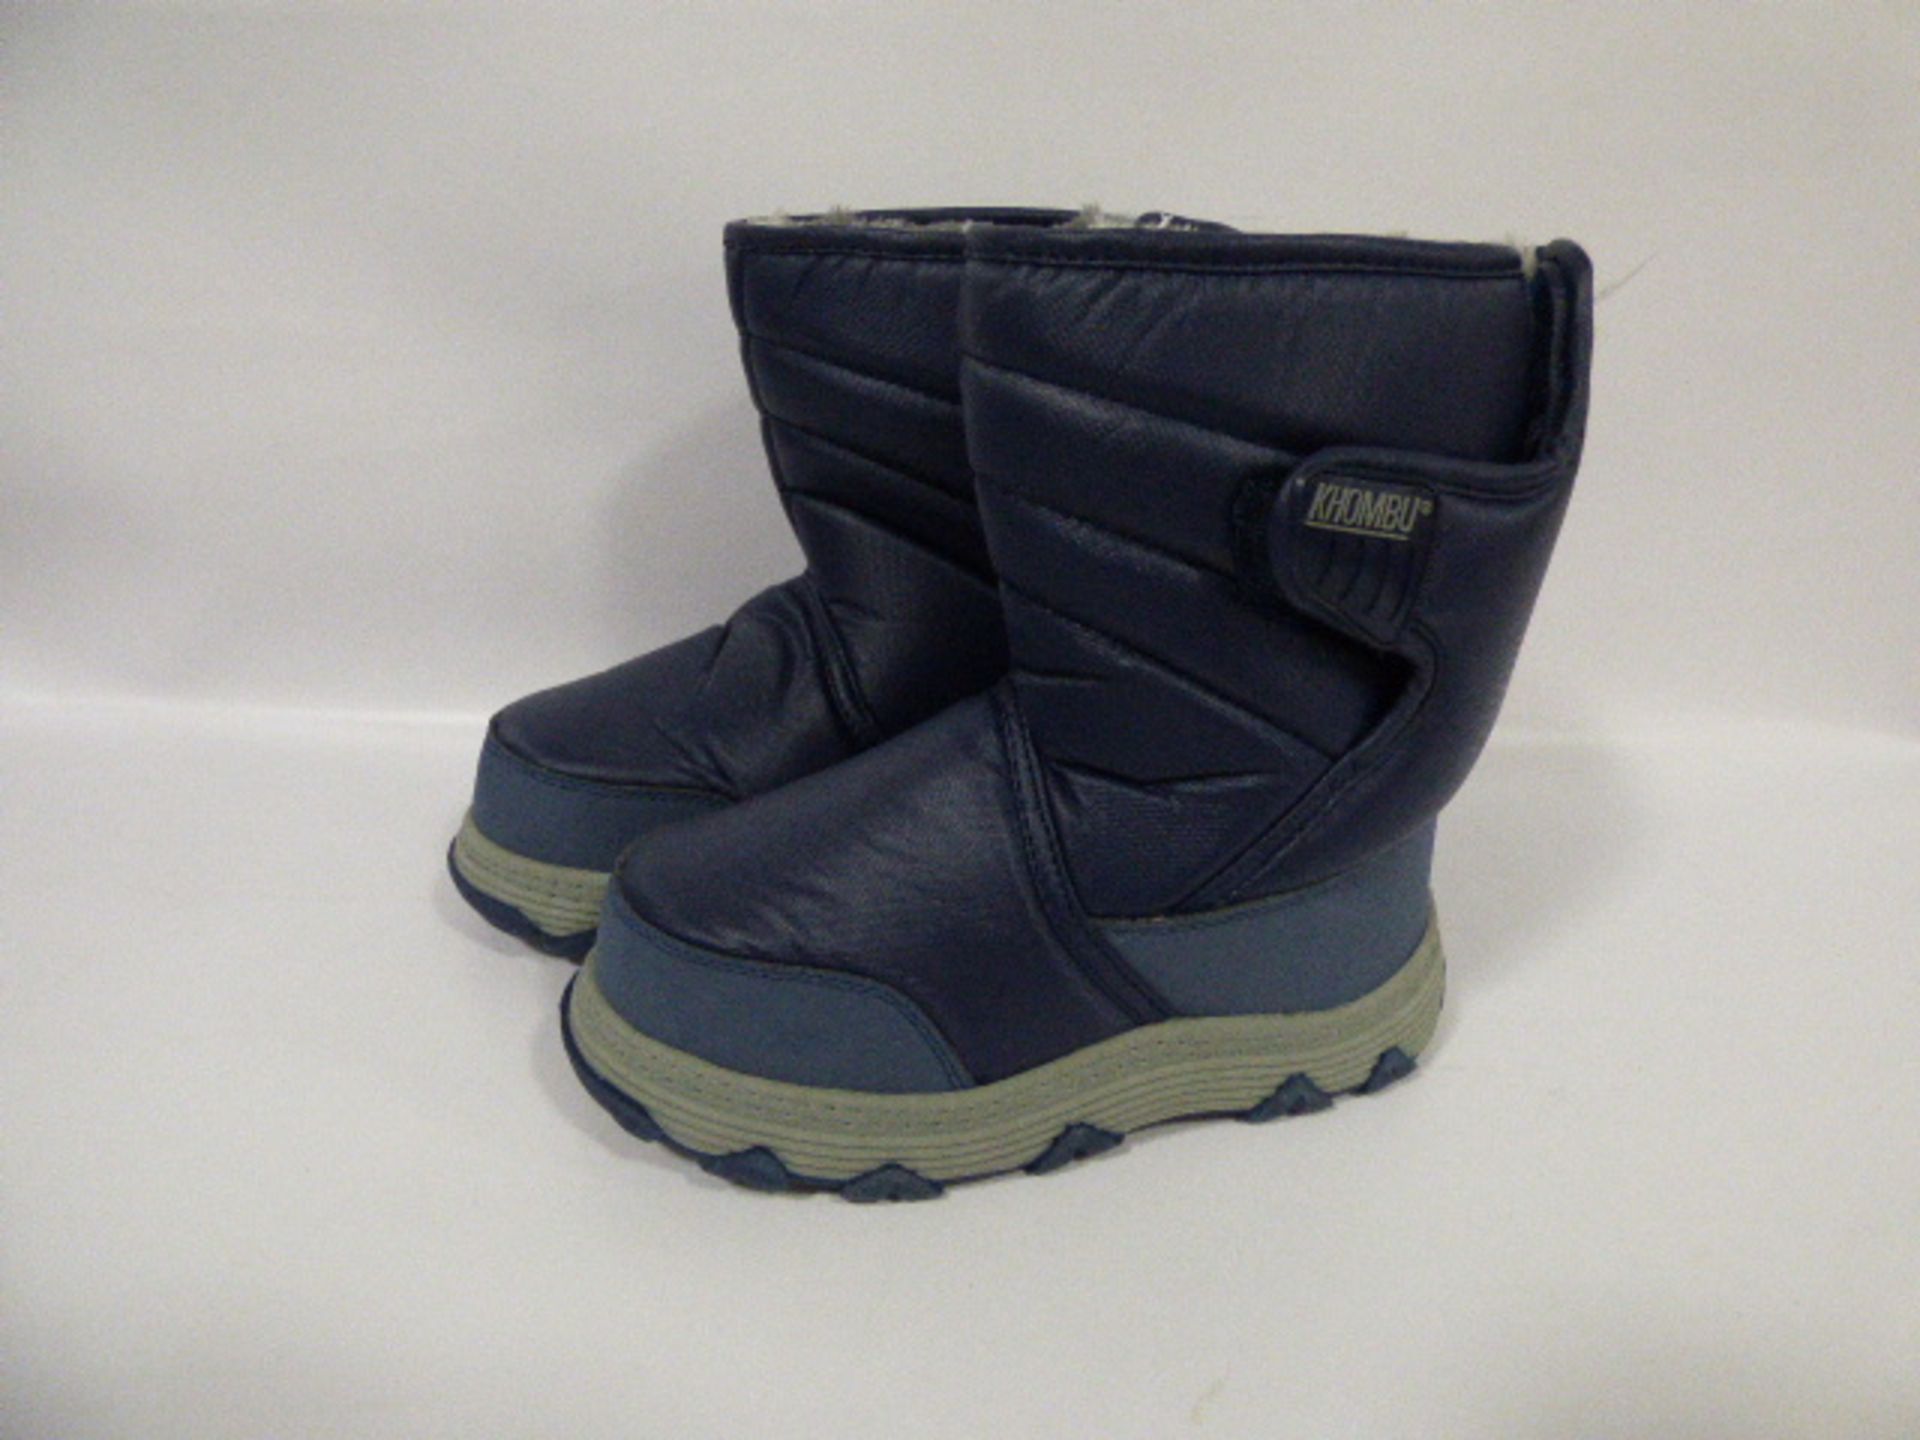 *Pair of Navy Khombu Kids Snow Boots - Size 12